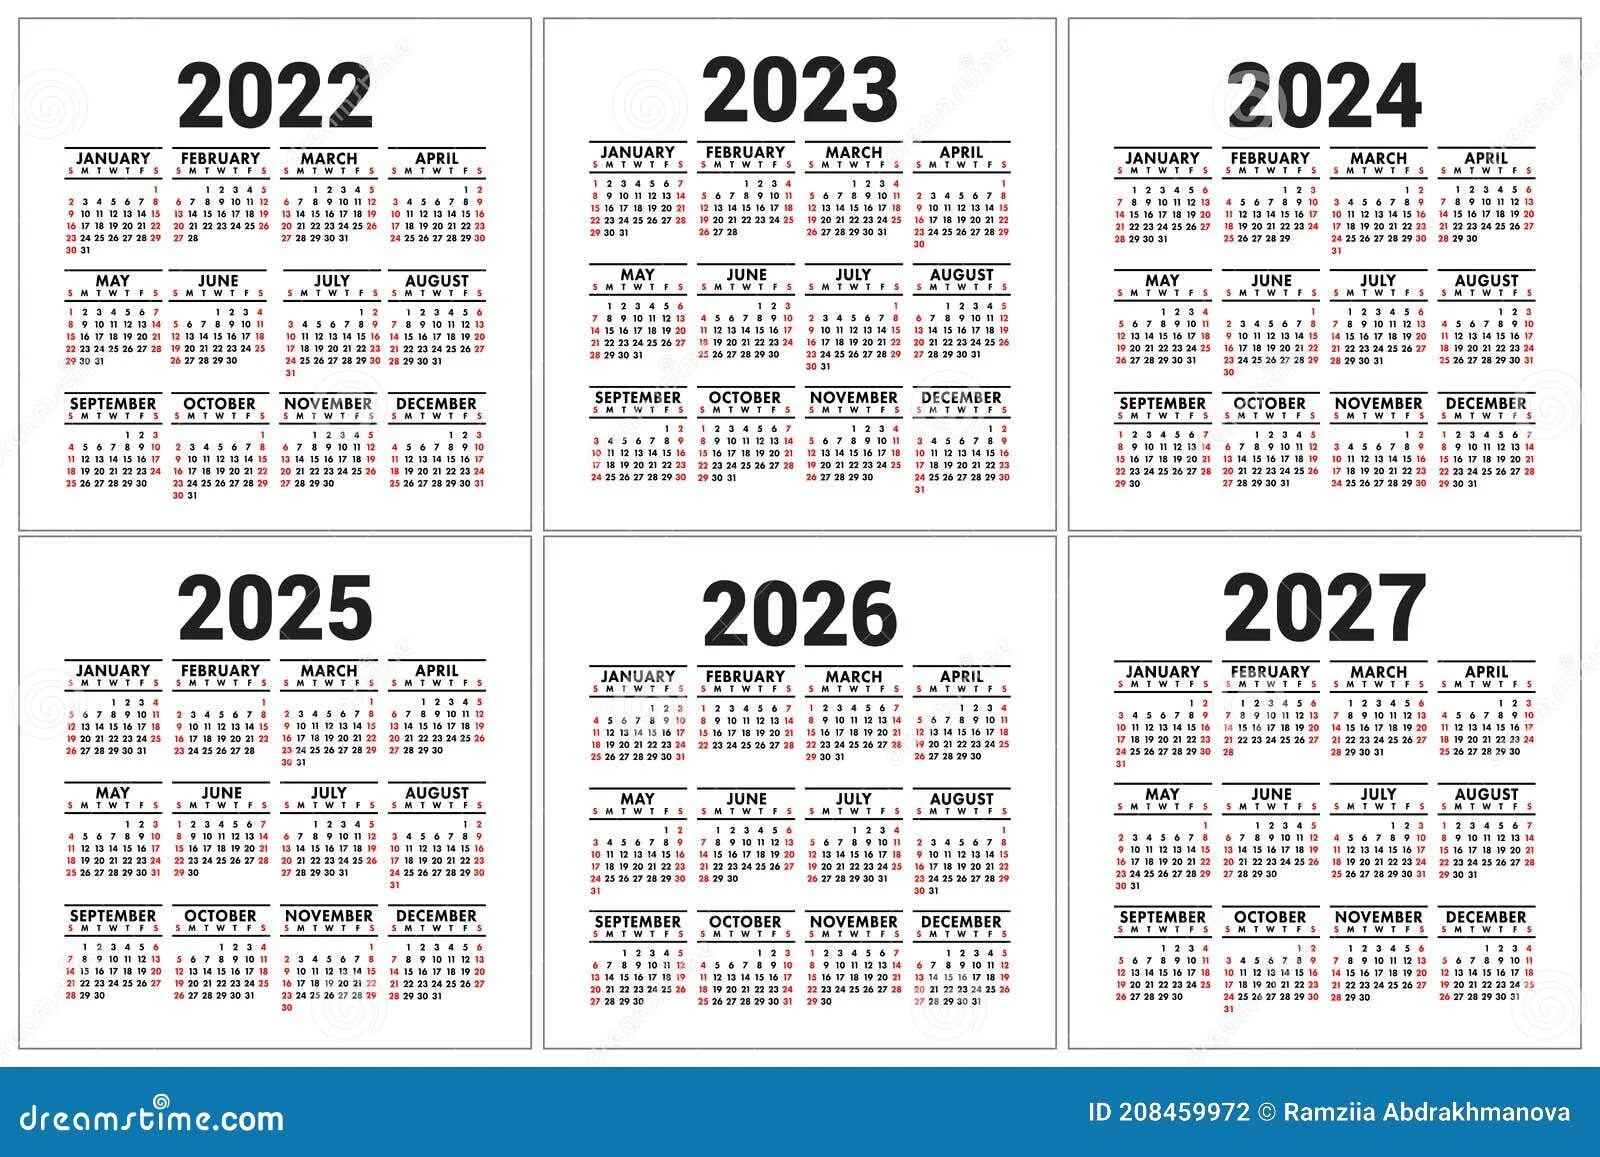 Крымский календарь на 2024 год. Календарь 2023 2024 2025 2026. Календарь на 2024 2025 2026 2027. Календарь 2022-2023. Календарь 2022 2023 2024.